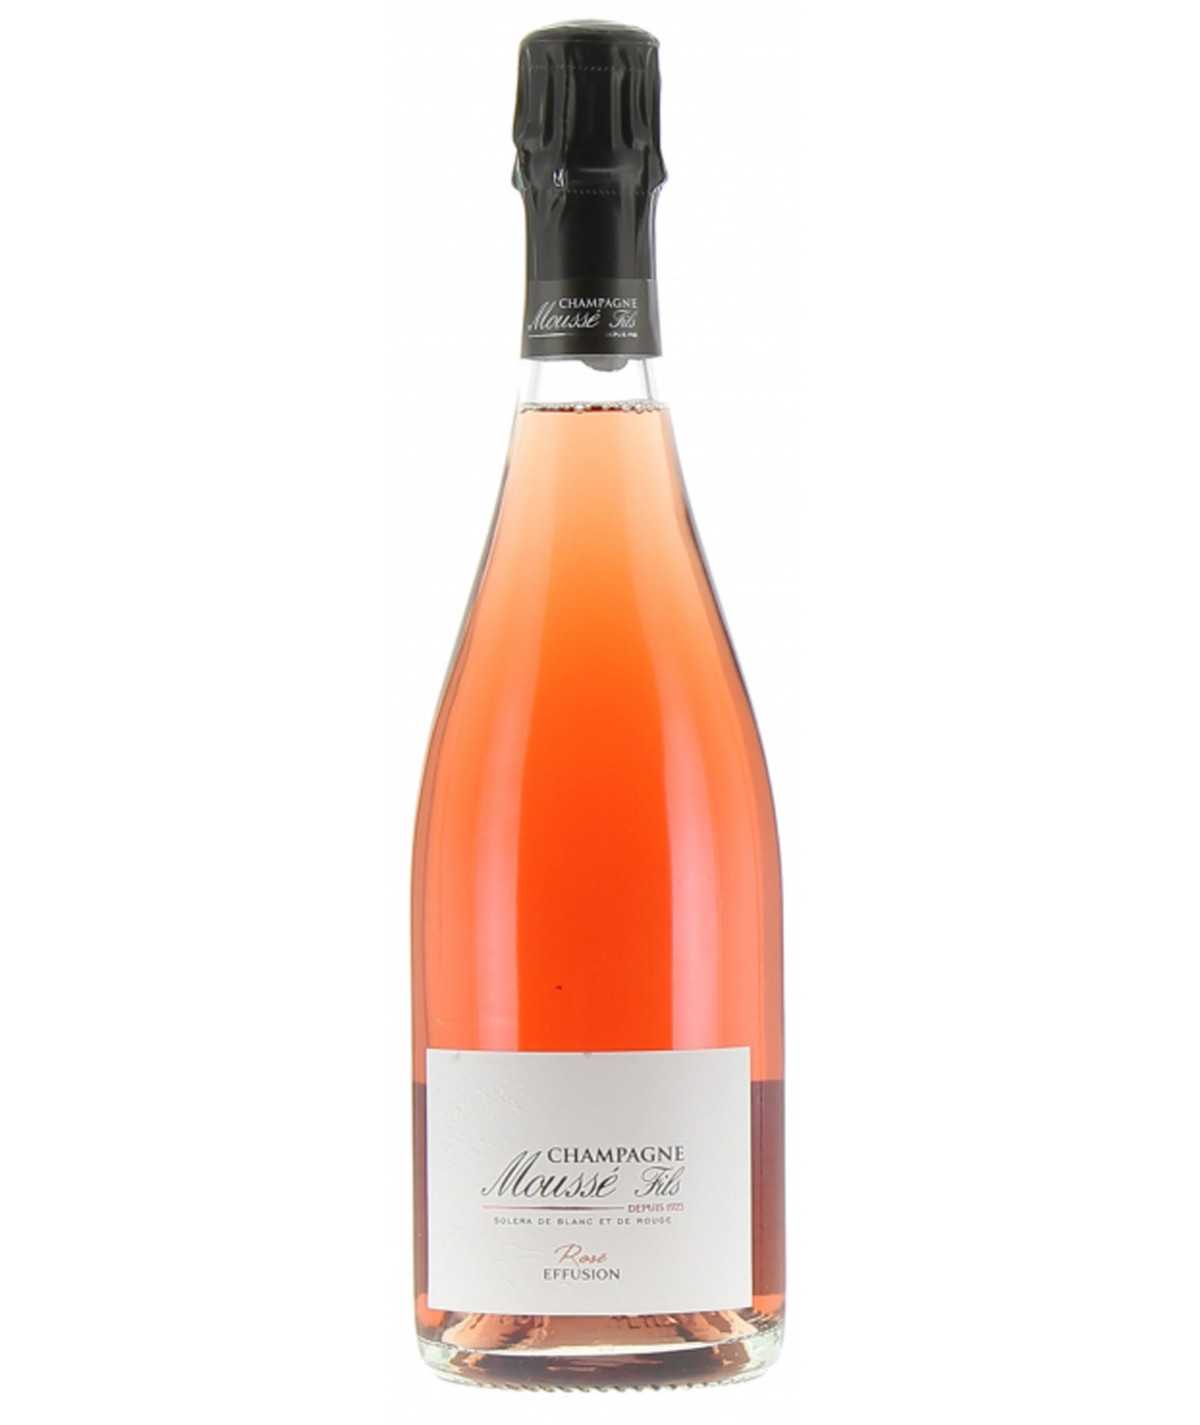 Buy pink sparkling wine MOUSSE Fils Rosé Effusion